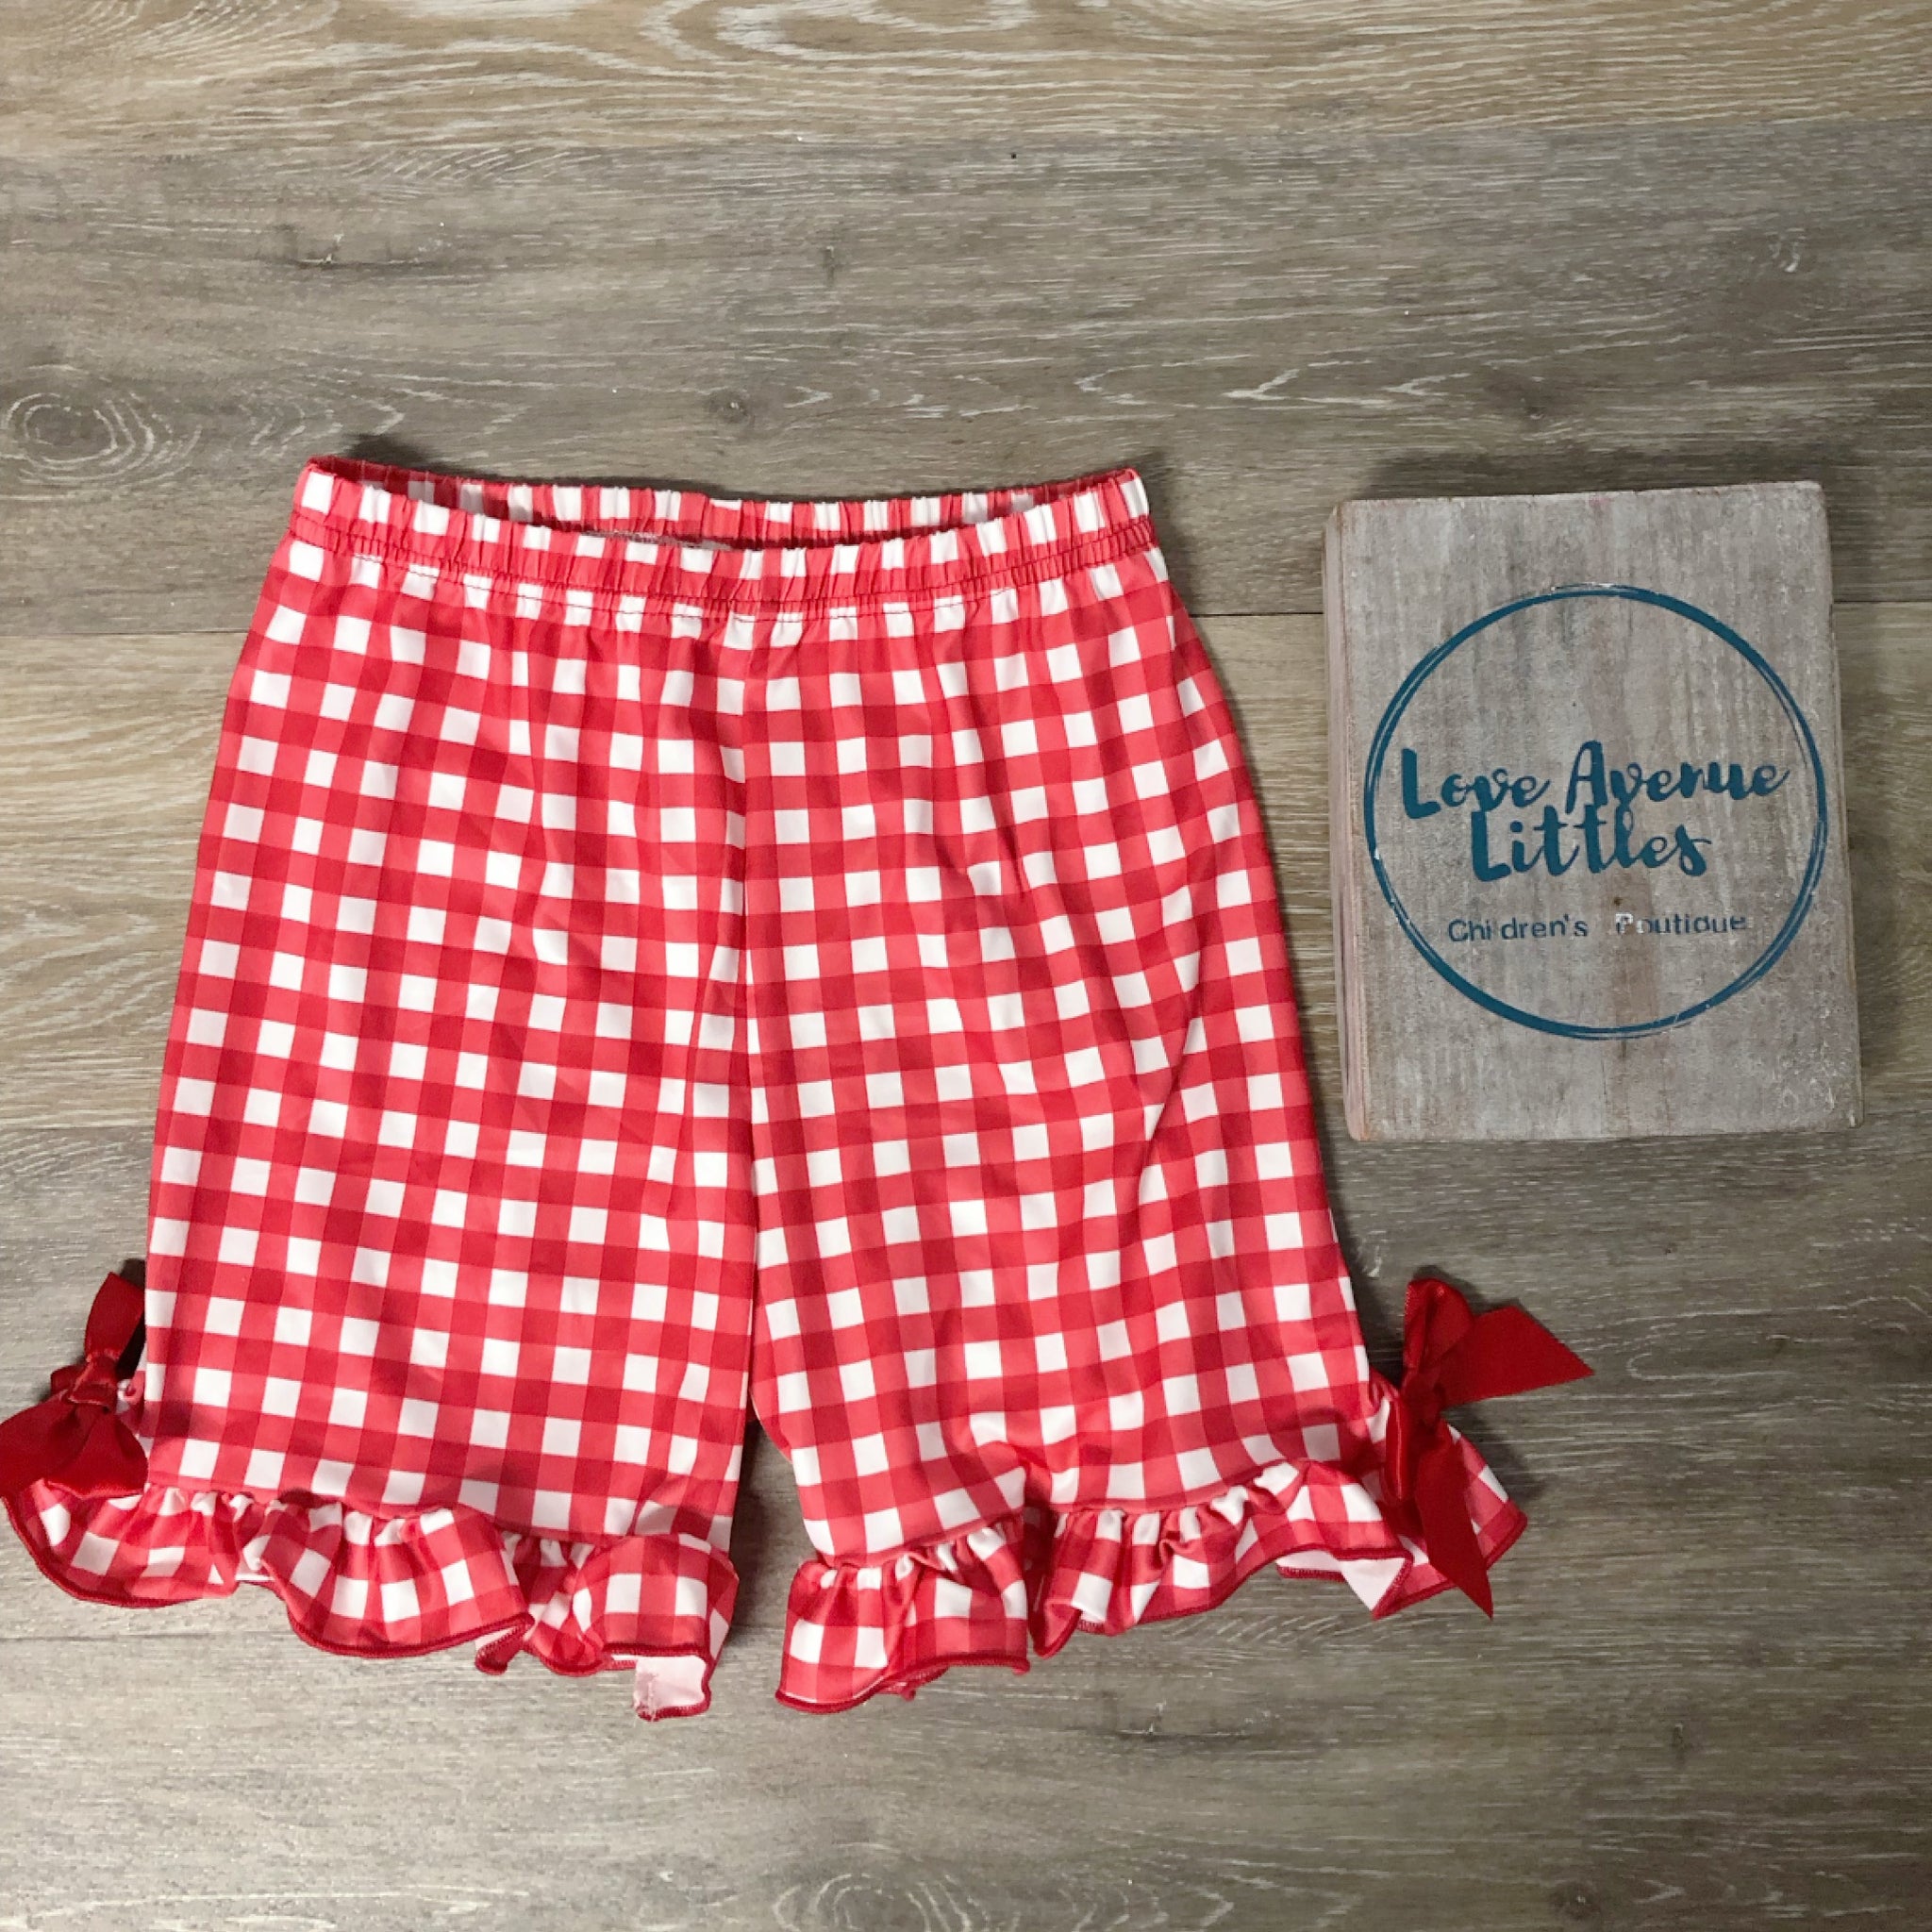 Patachou corduroy ruffle-hem shorts - Red